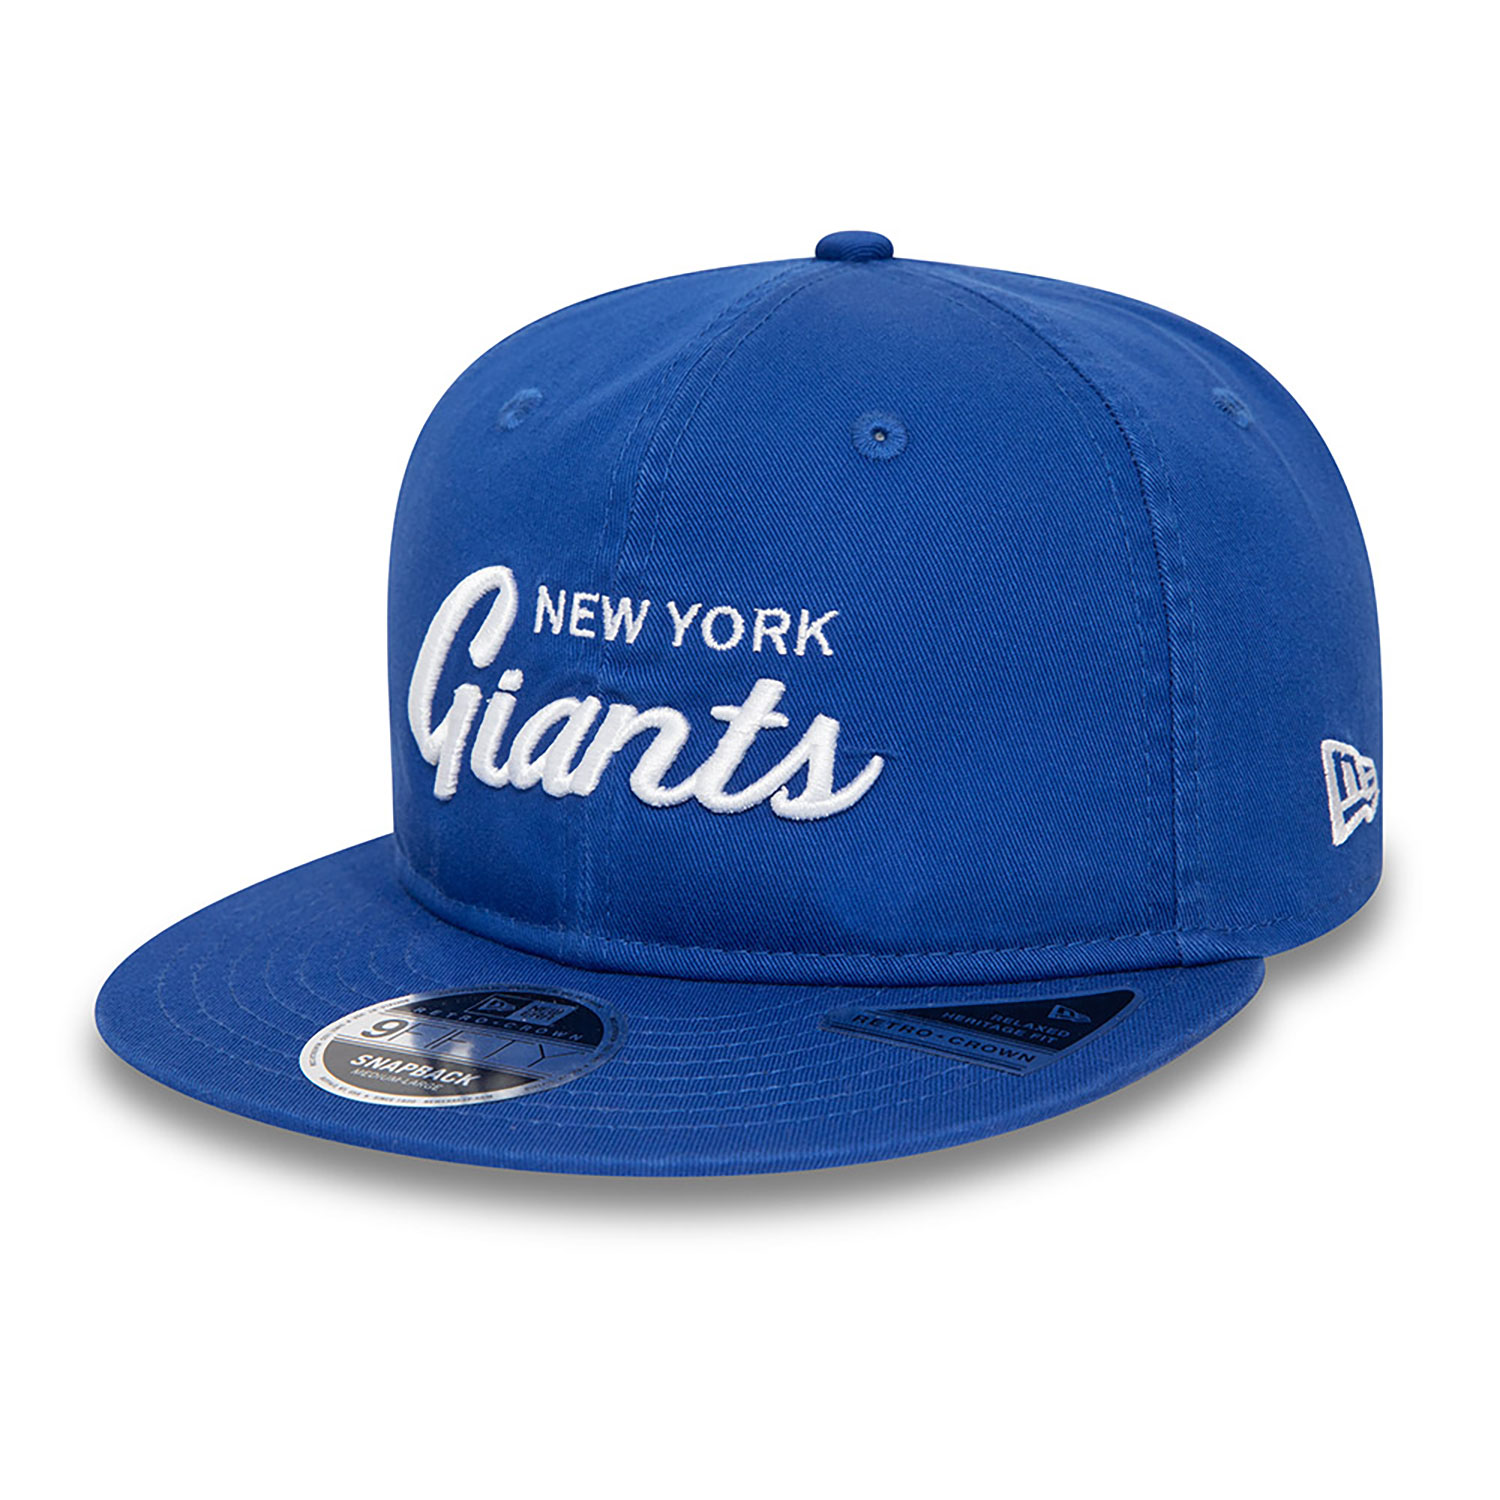 New York Giants NFL Retro Blue Retro Crown 9FIFTY Snapback Cap